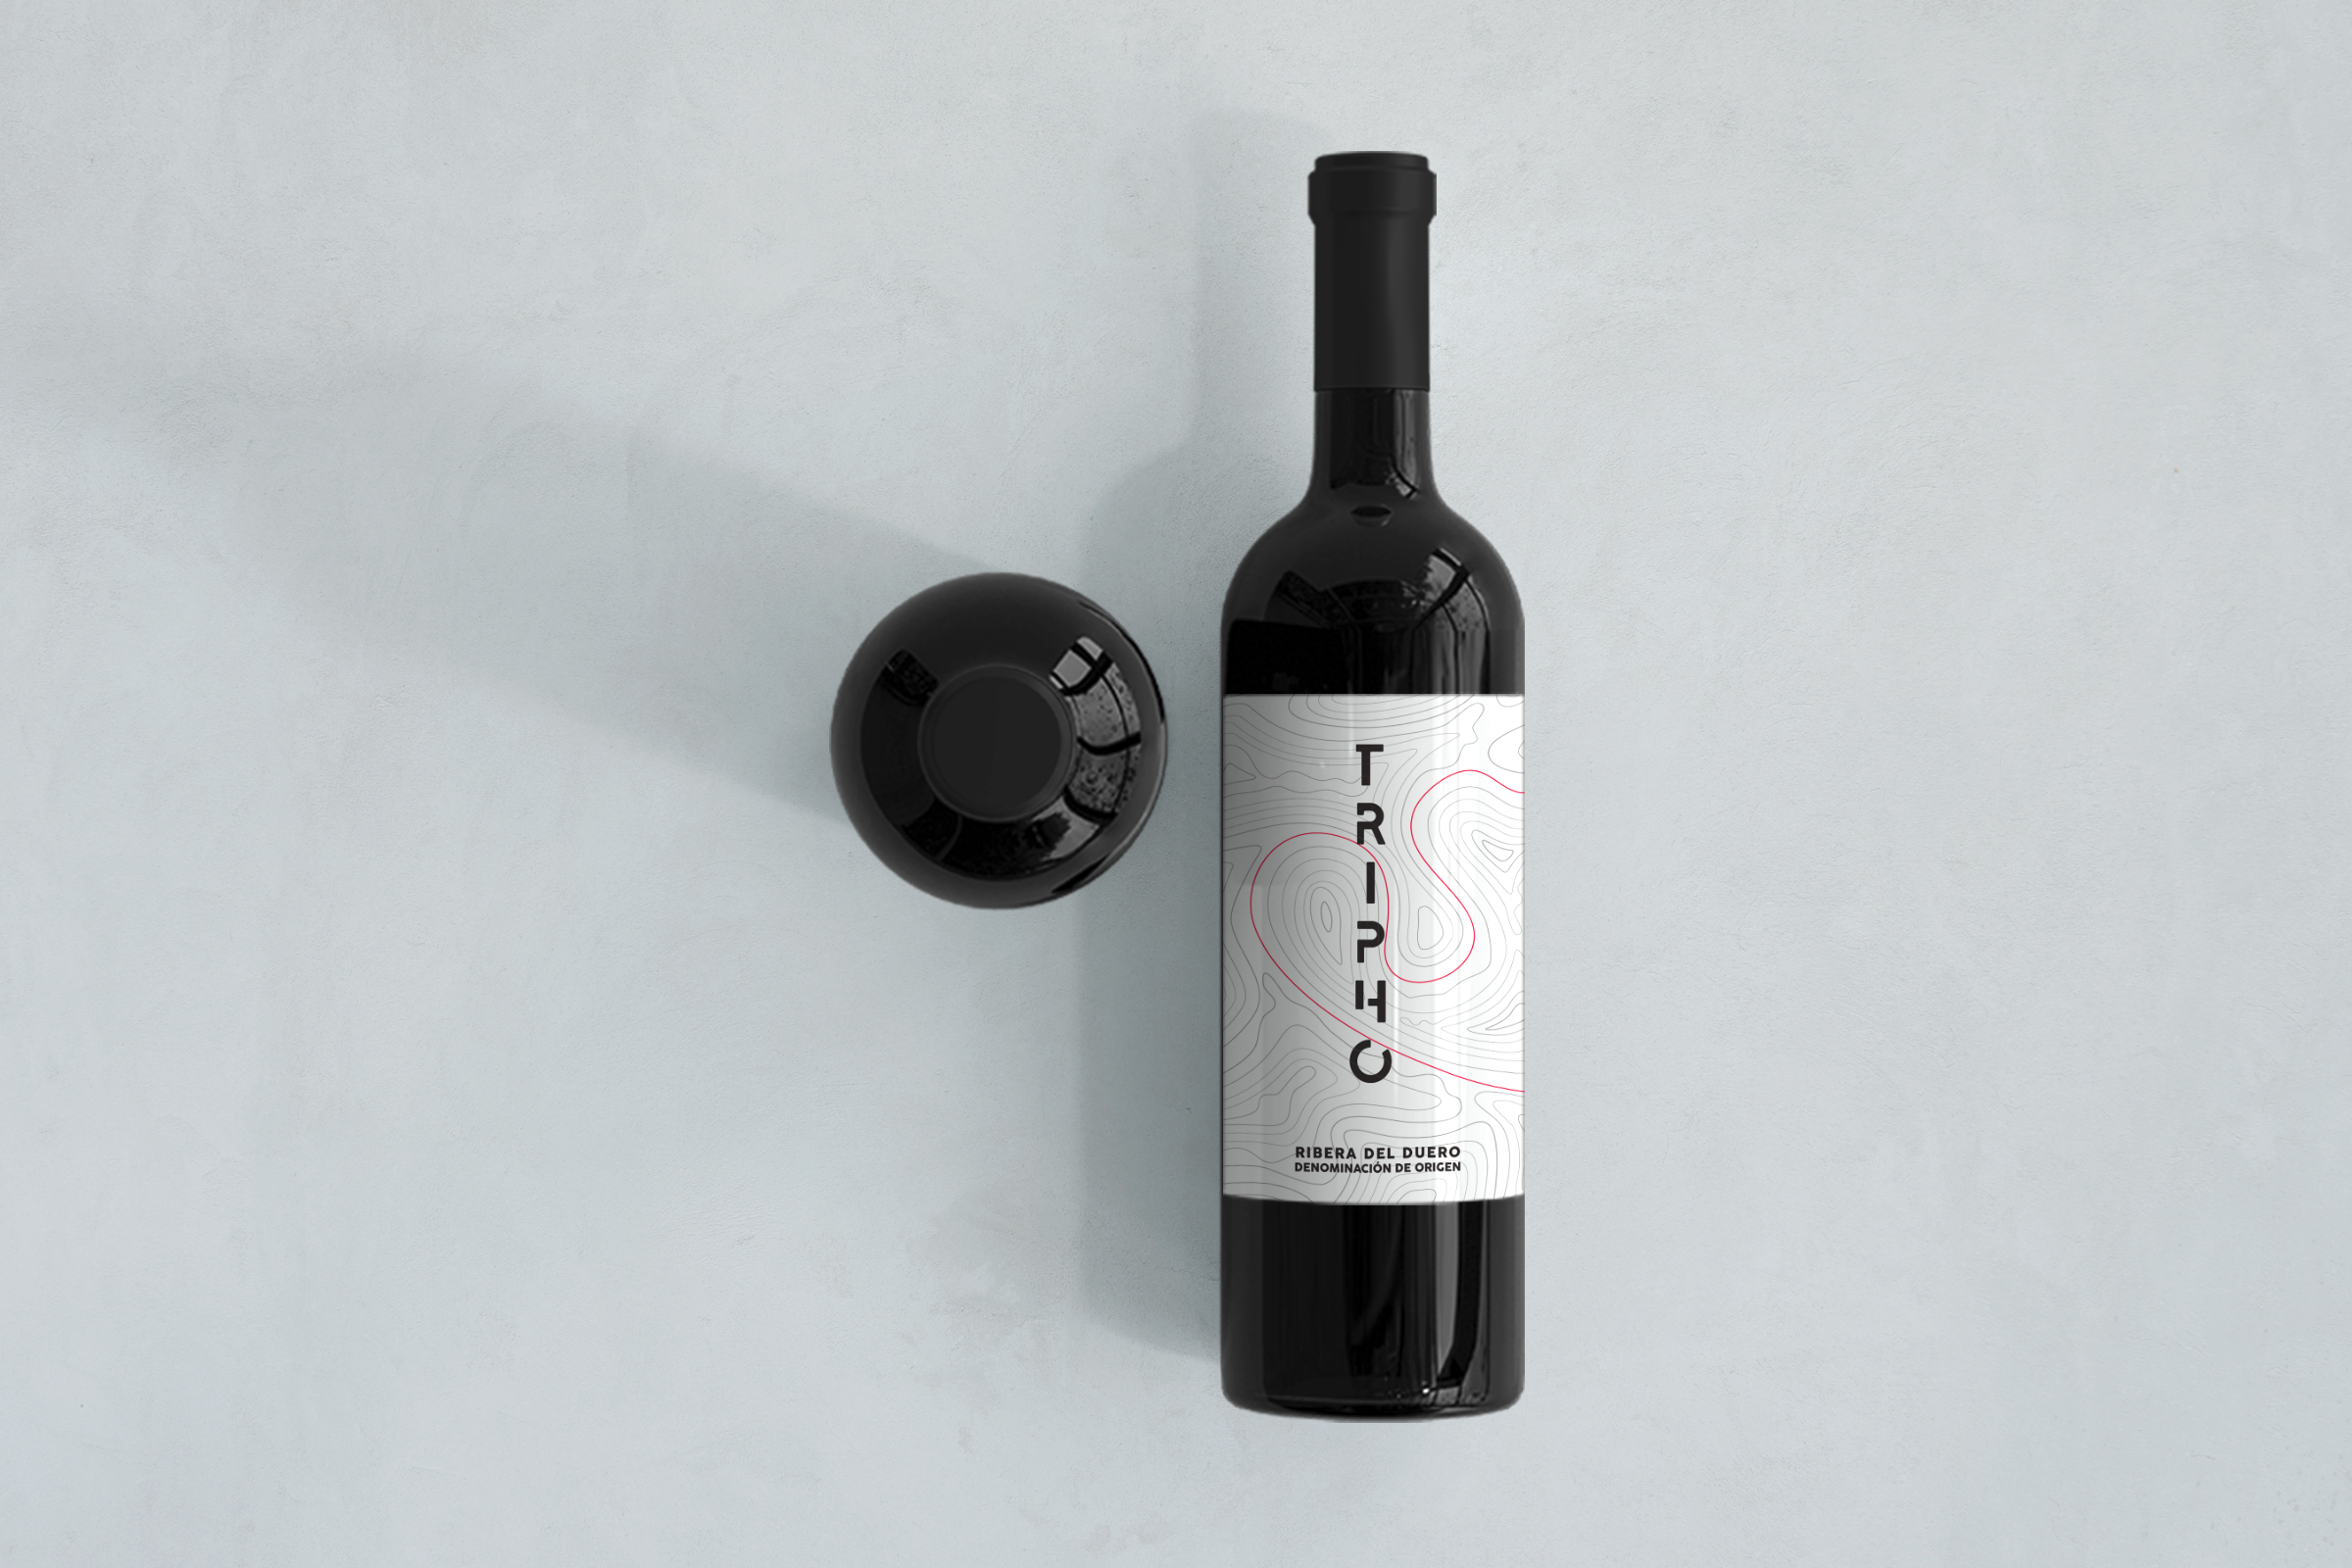 Diseño de etiqueta para botella de vino